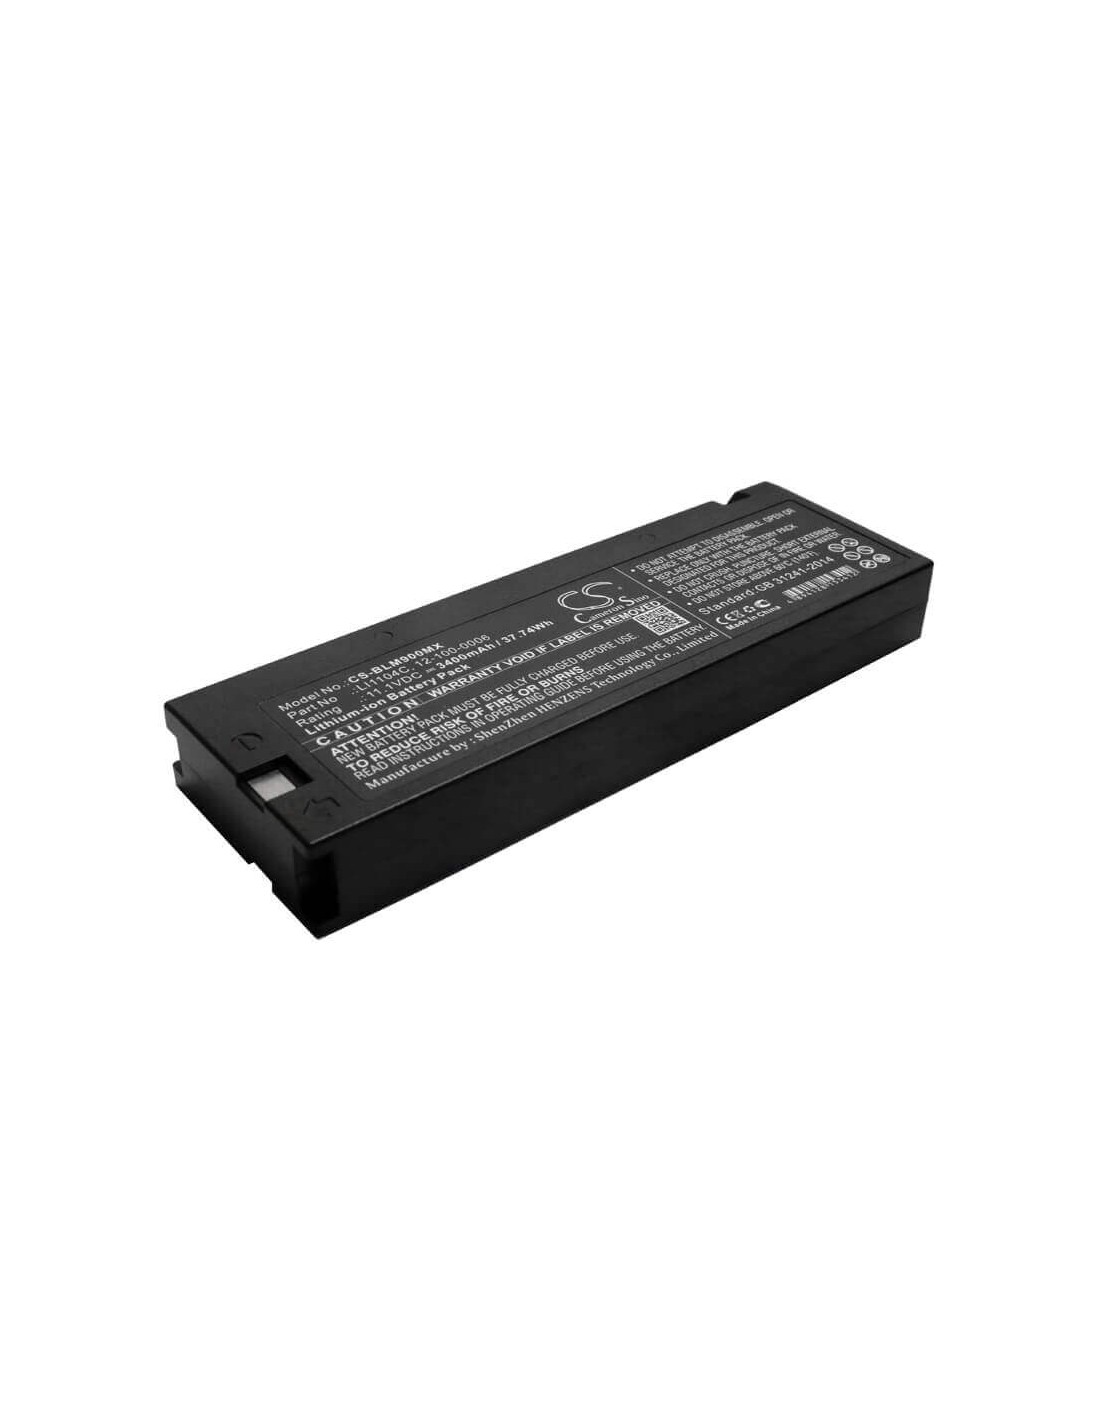 Battery for Biolight, M66, M8000, M9000 11.1V, 3400mAh - 37.74Wh